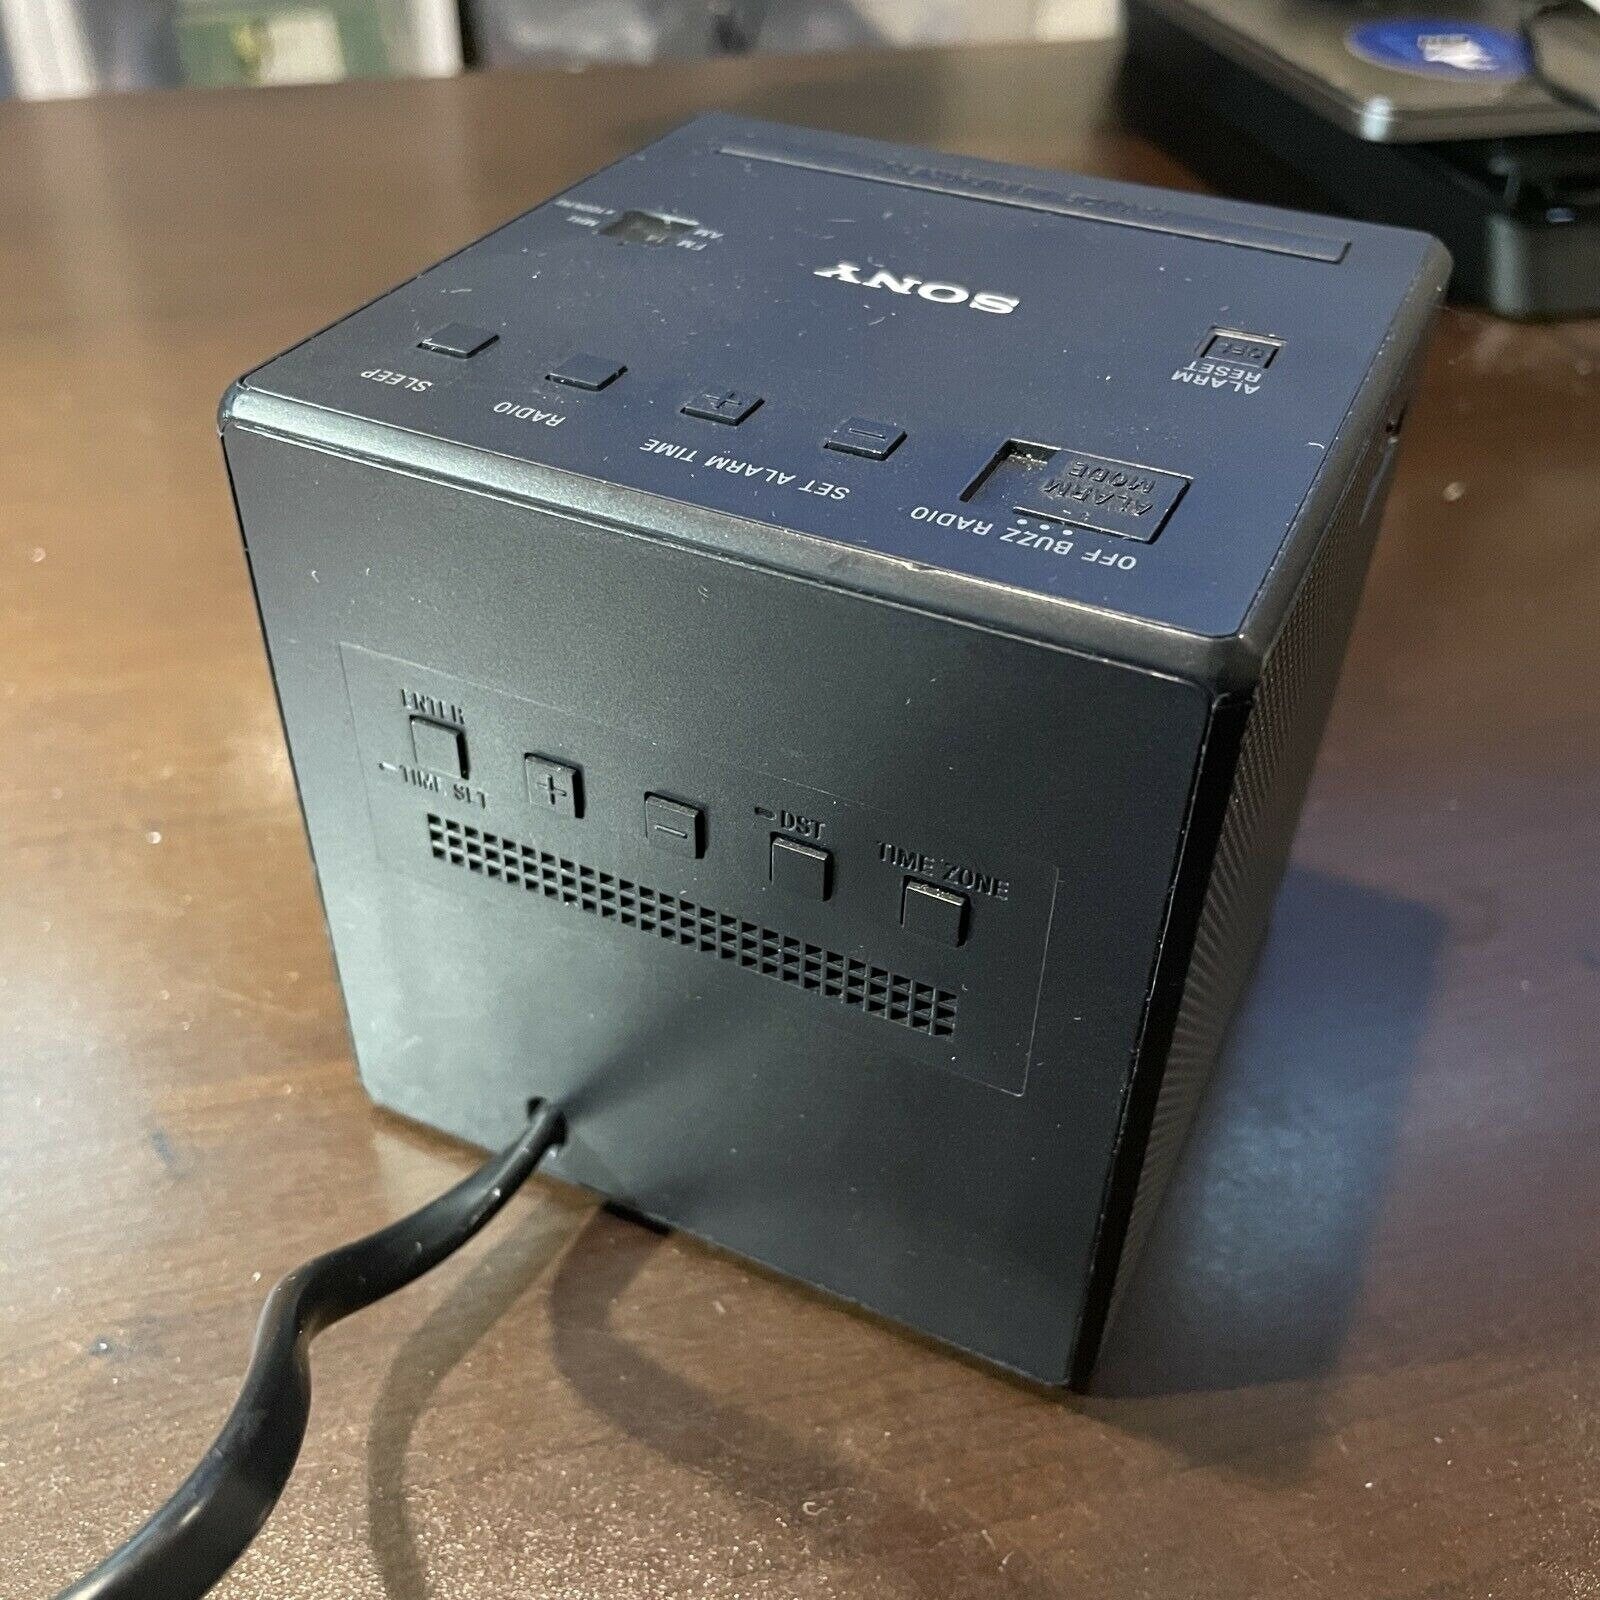 Sony ICF-C1 Cube Alarm Clock